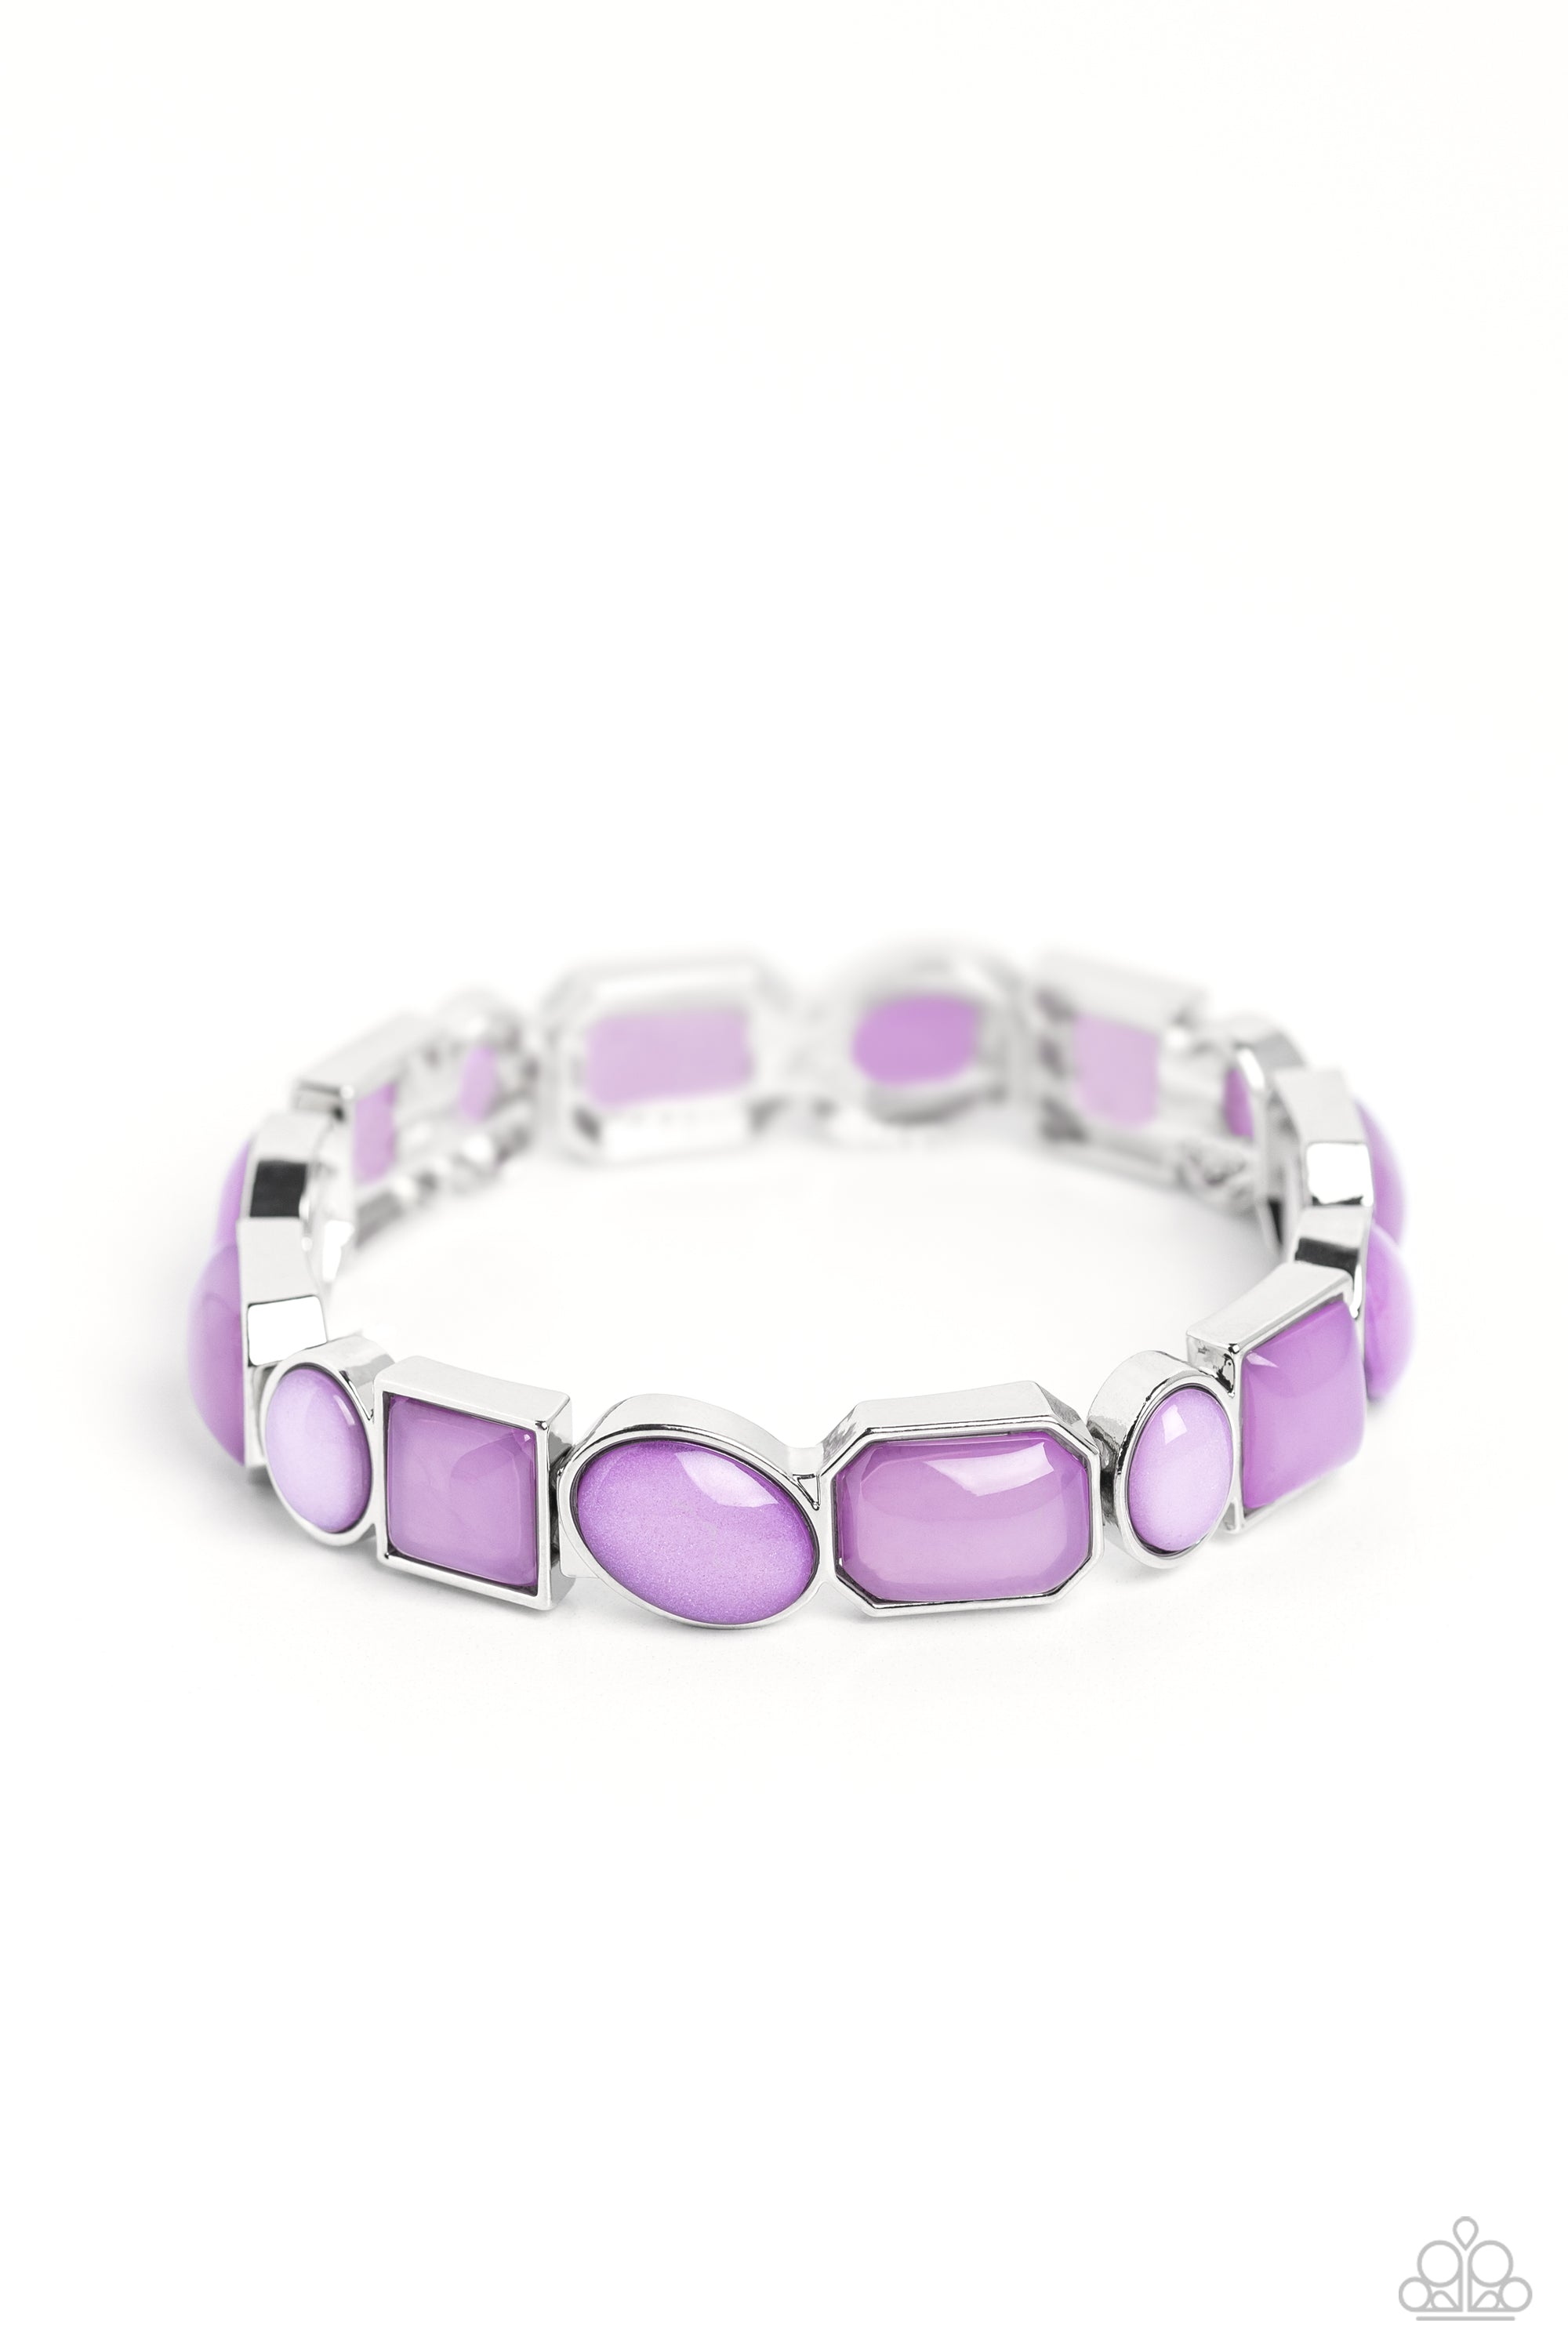 Color Coordinated Purple Bracelet – Ericka C Wise, $5 Jewelry